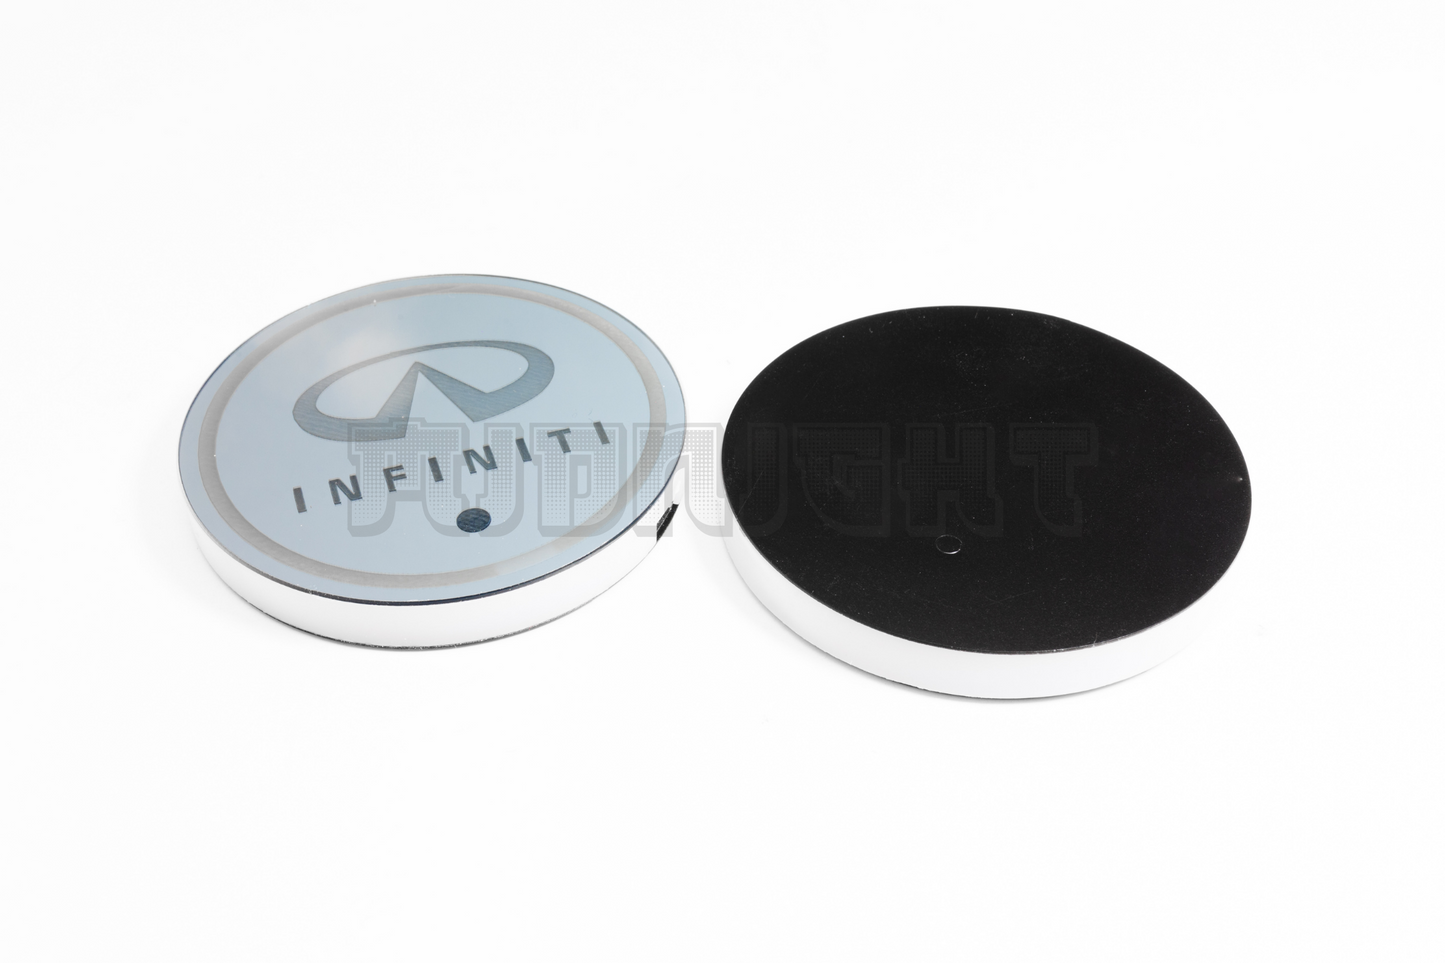 Infiniti LED Cup Holder Coaster